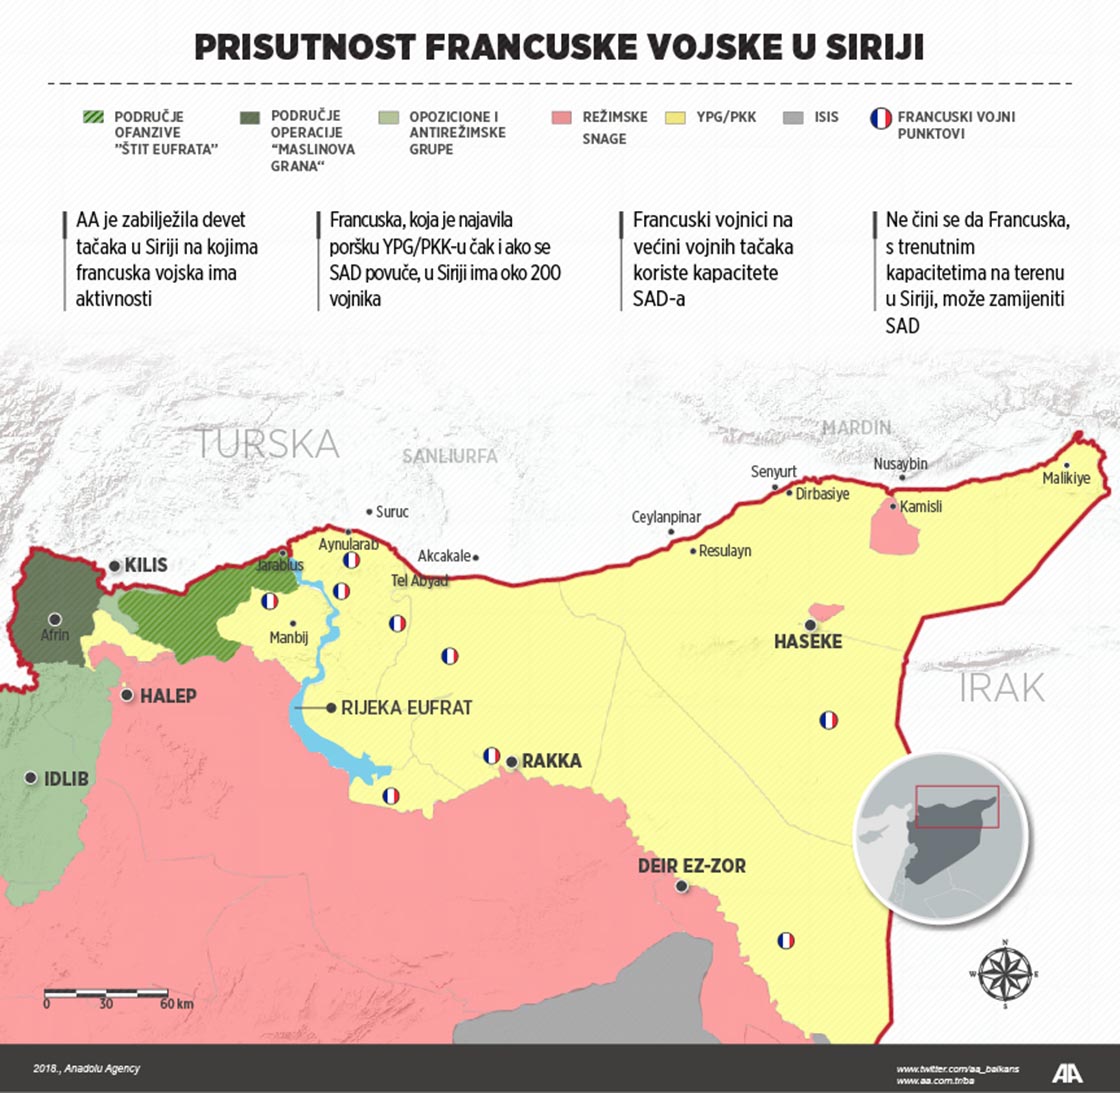 Prisutnost francuske vojske u Siriji 